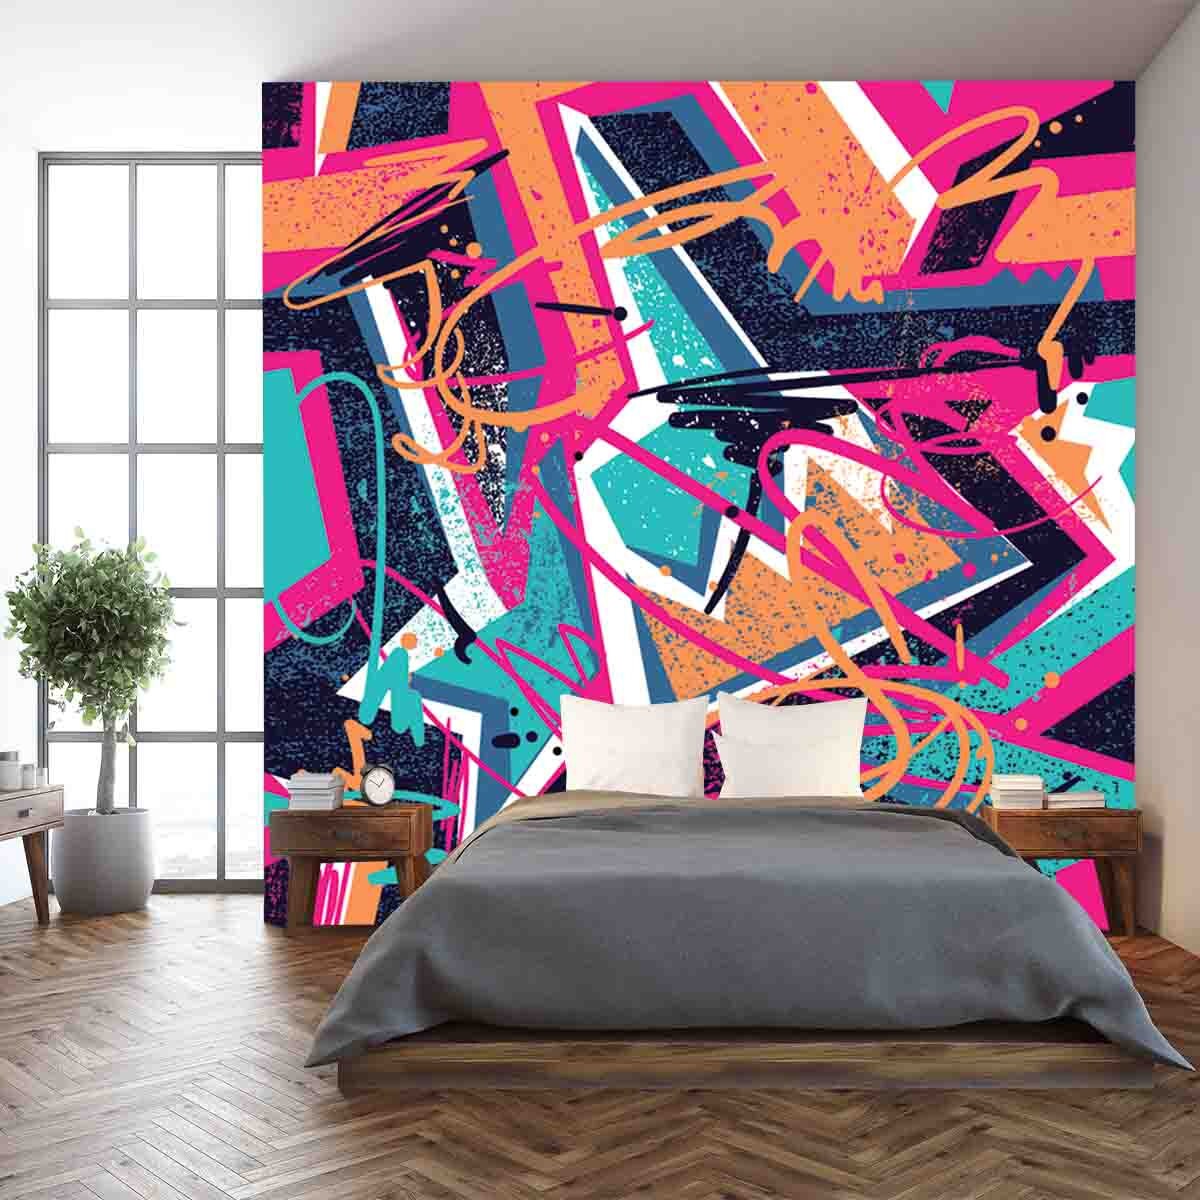 Grunge geometric Repeats Backdrop. Graffiti Style Ornament Wallpaper Bedroom Mural